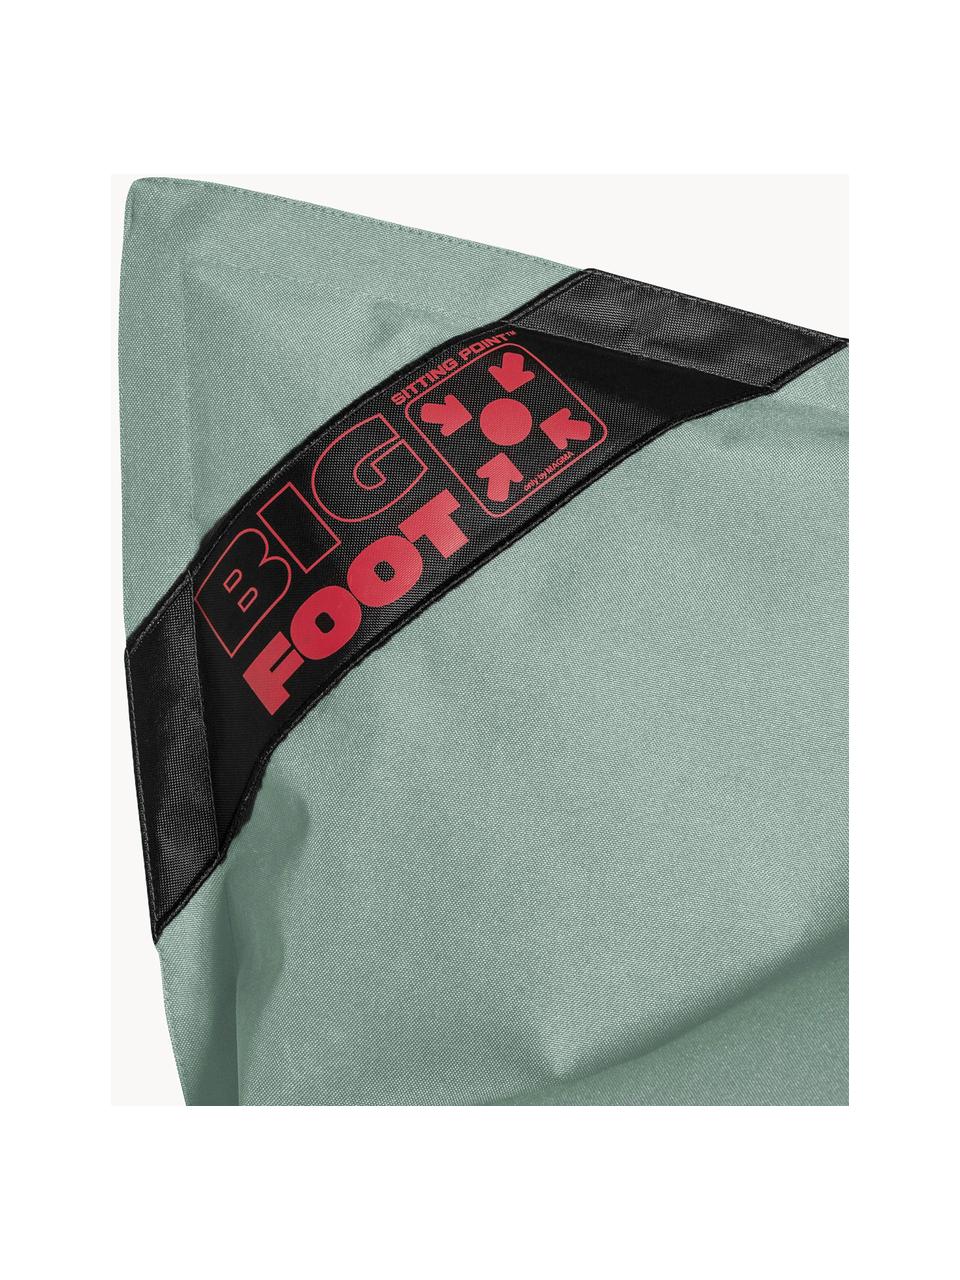 Pouf sacco grande Scuba, Rivestimento: 100% polipropilene resist, Verde salvia, Larg. 130 x Alt. 170 cm